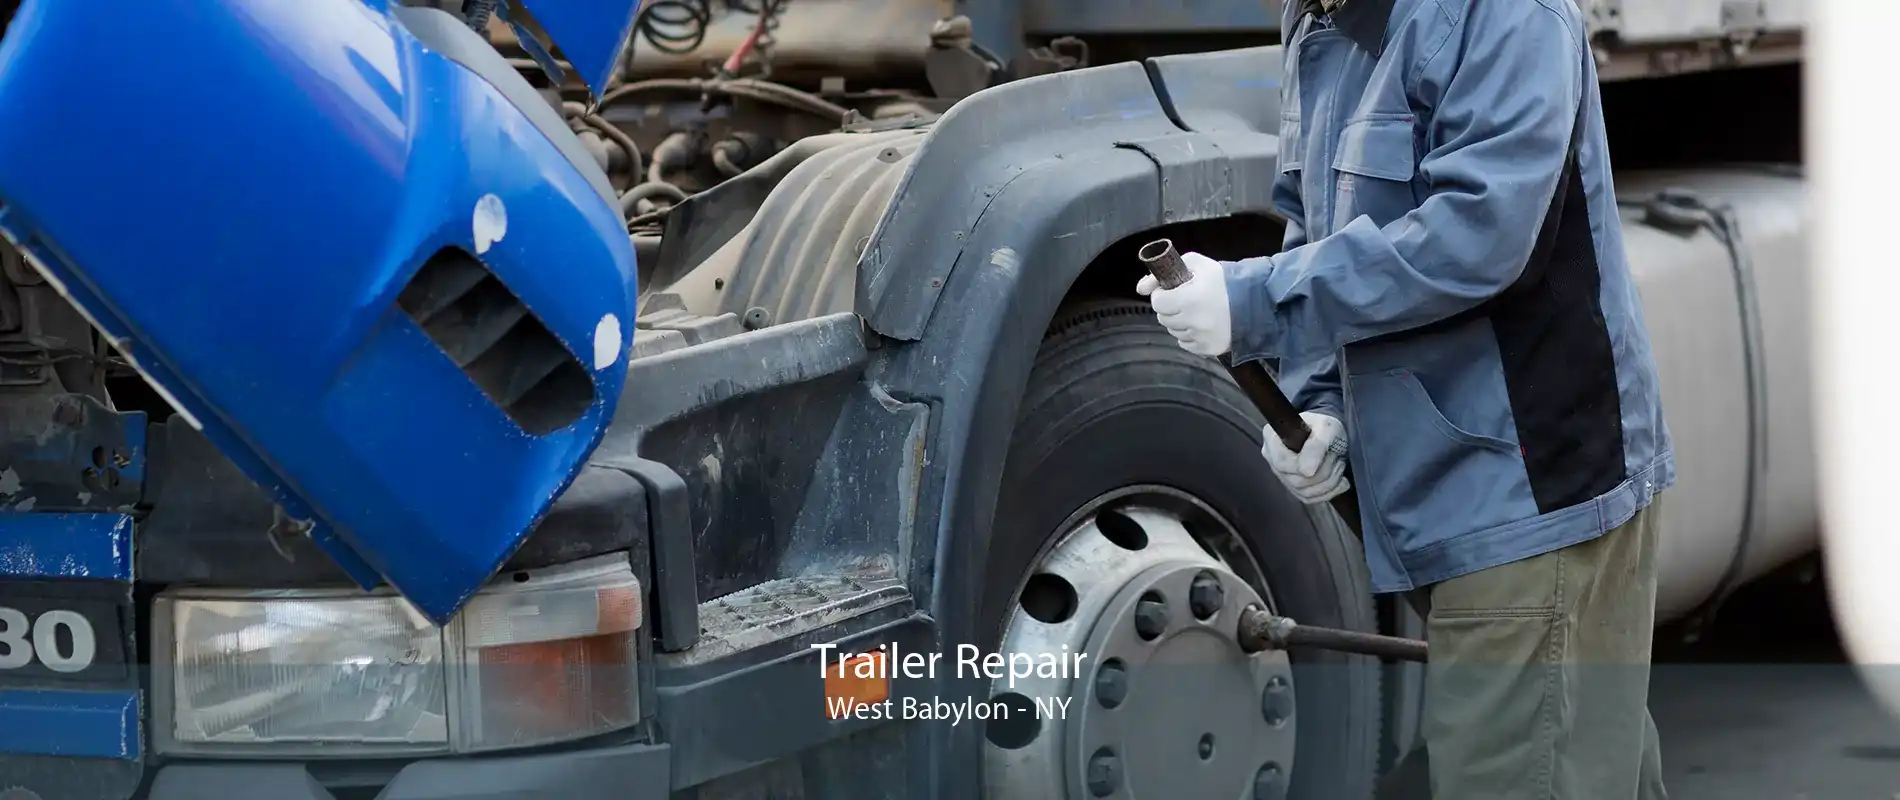 Trailer Repair West Babylon - NY